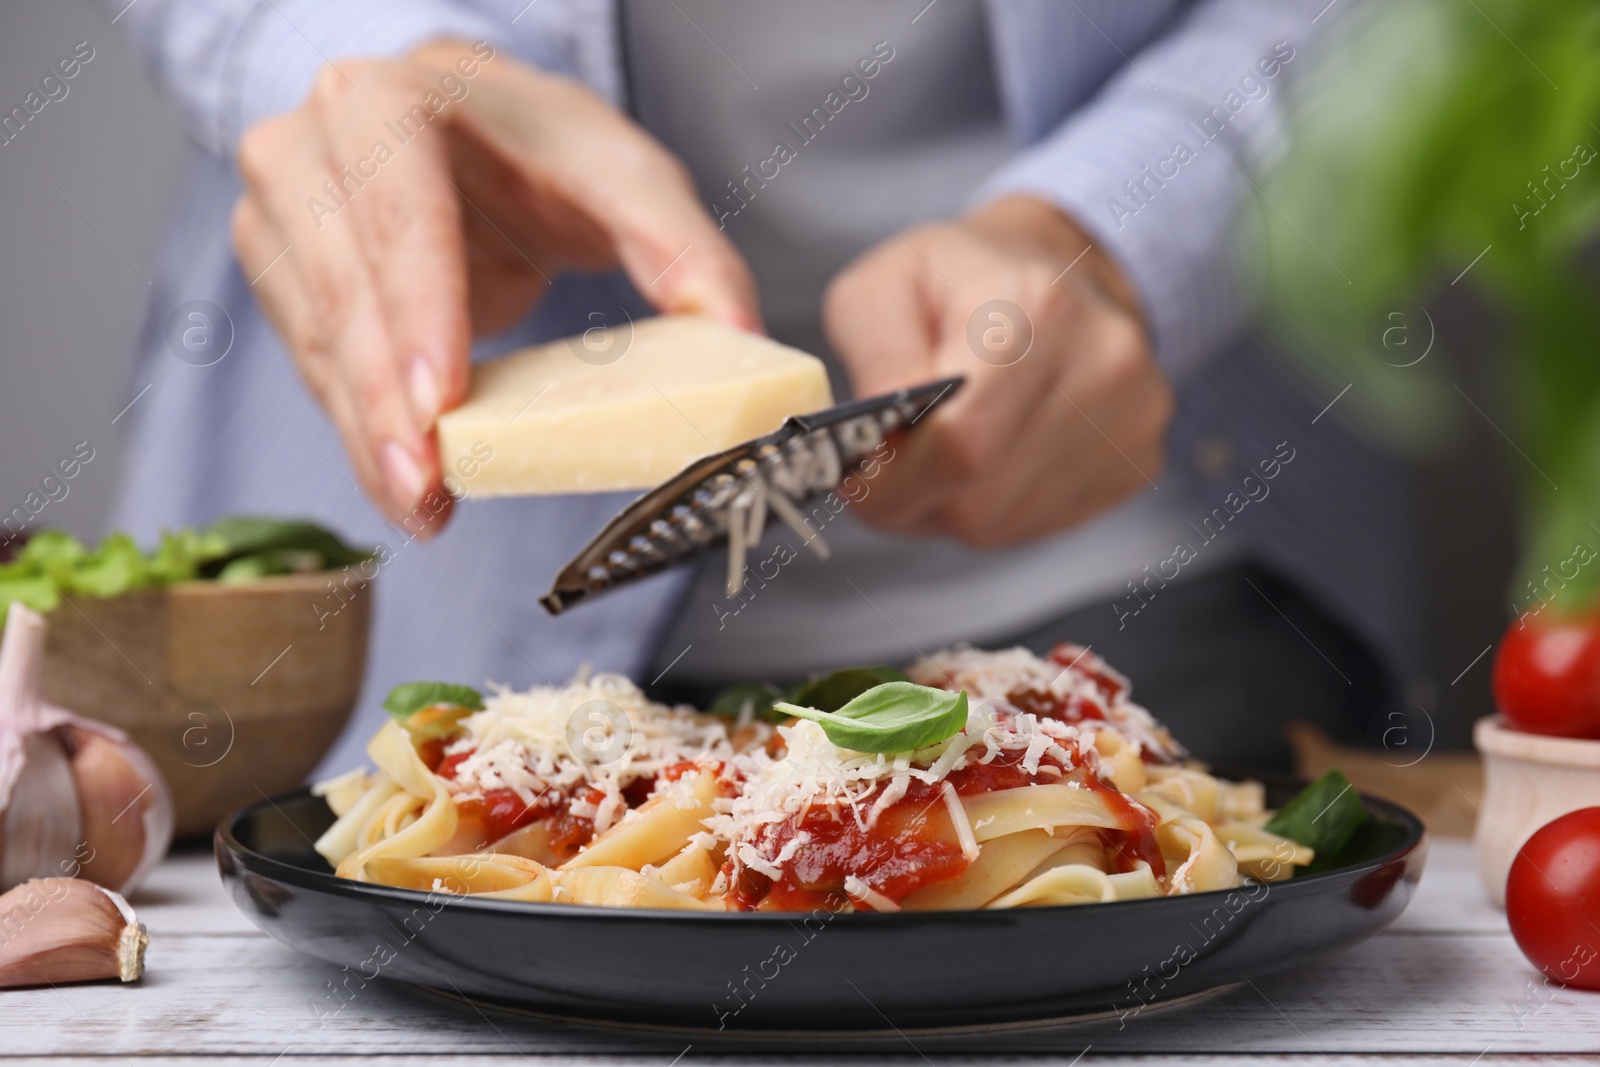 Photo of Woman grating parmesan cheese onto delicious pasta at wooden table, closeup